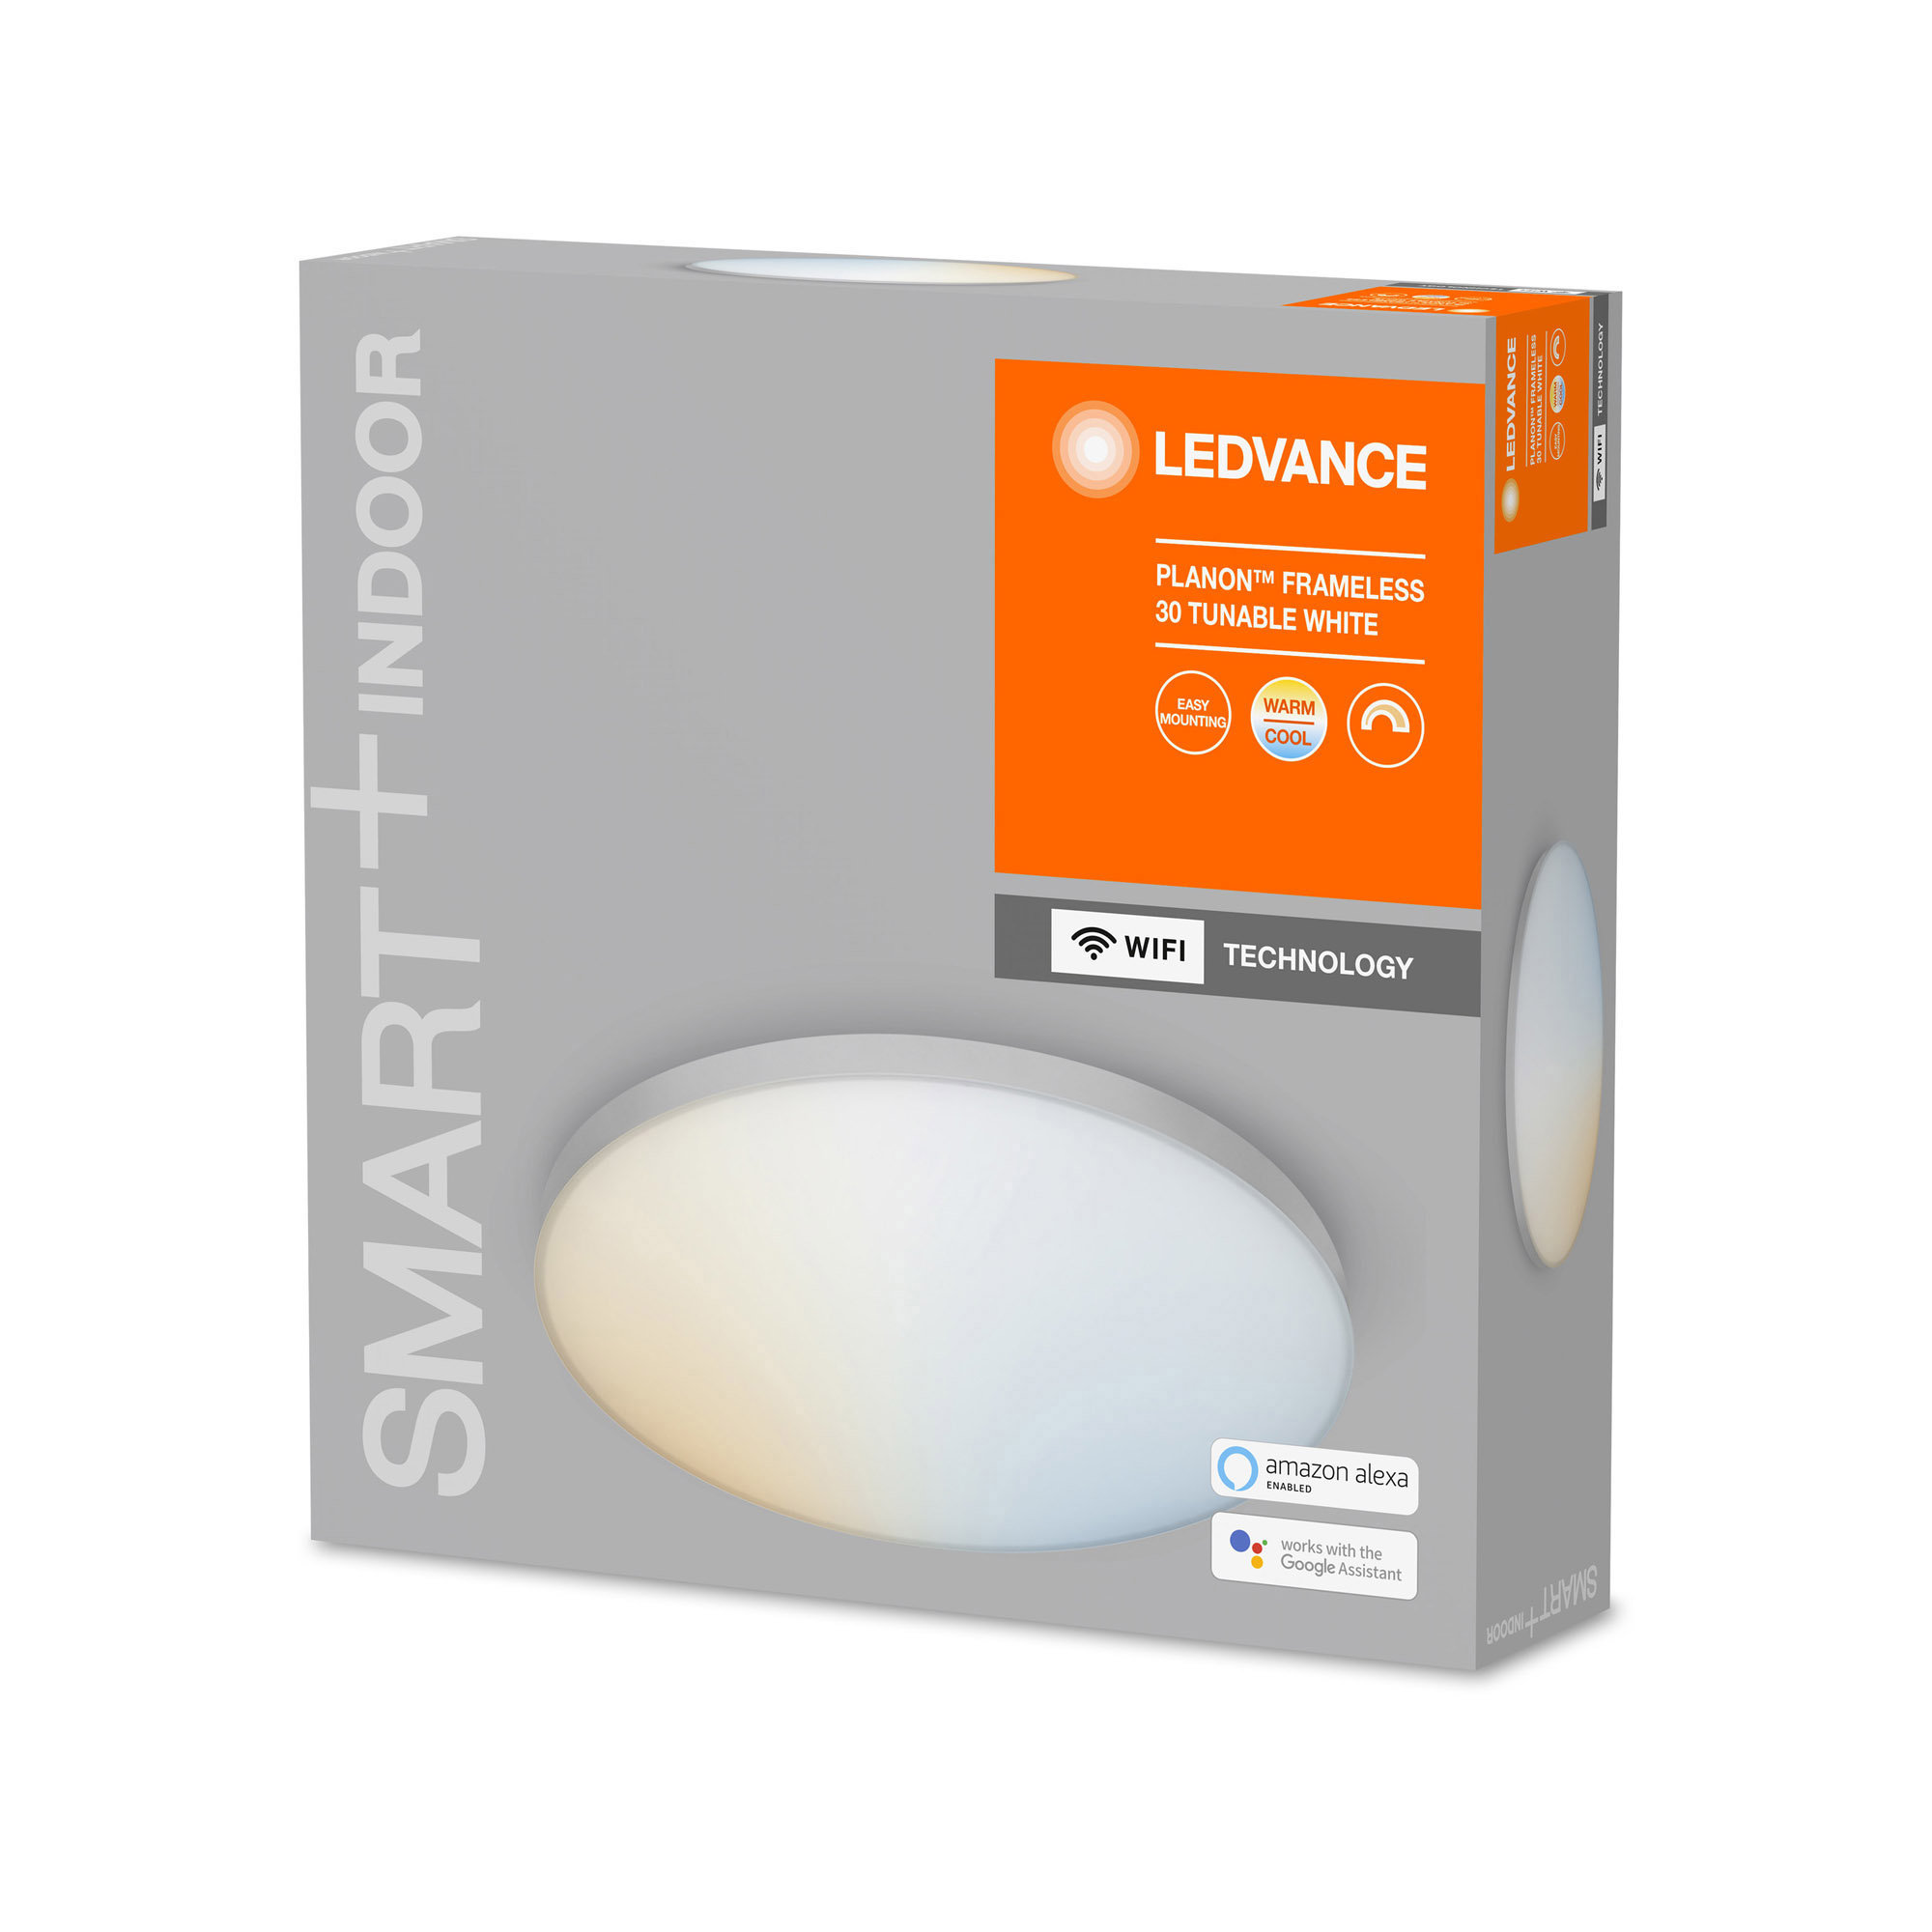 LEDVANCE SMART+ WiFi Tunable White LED Panel PLANON FRAMELESS 30cm 1700lm